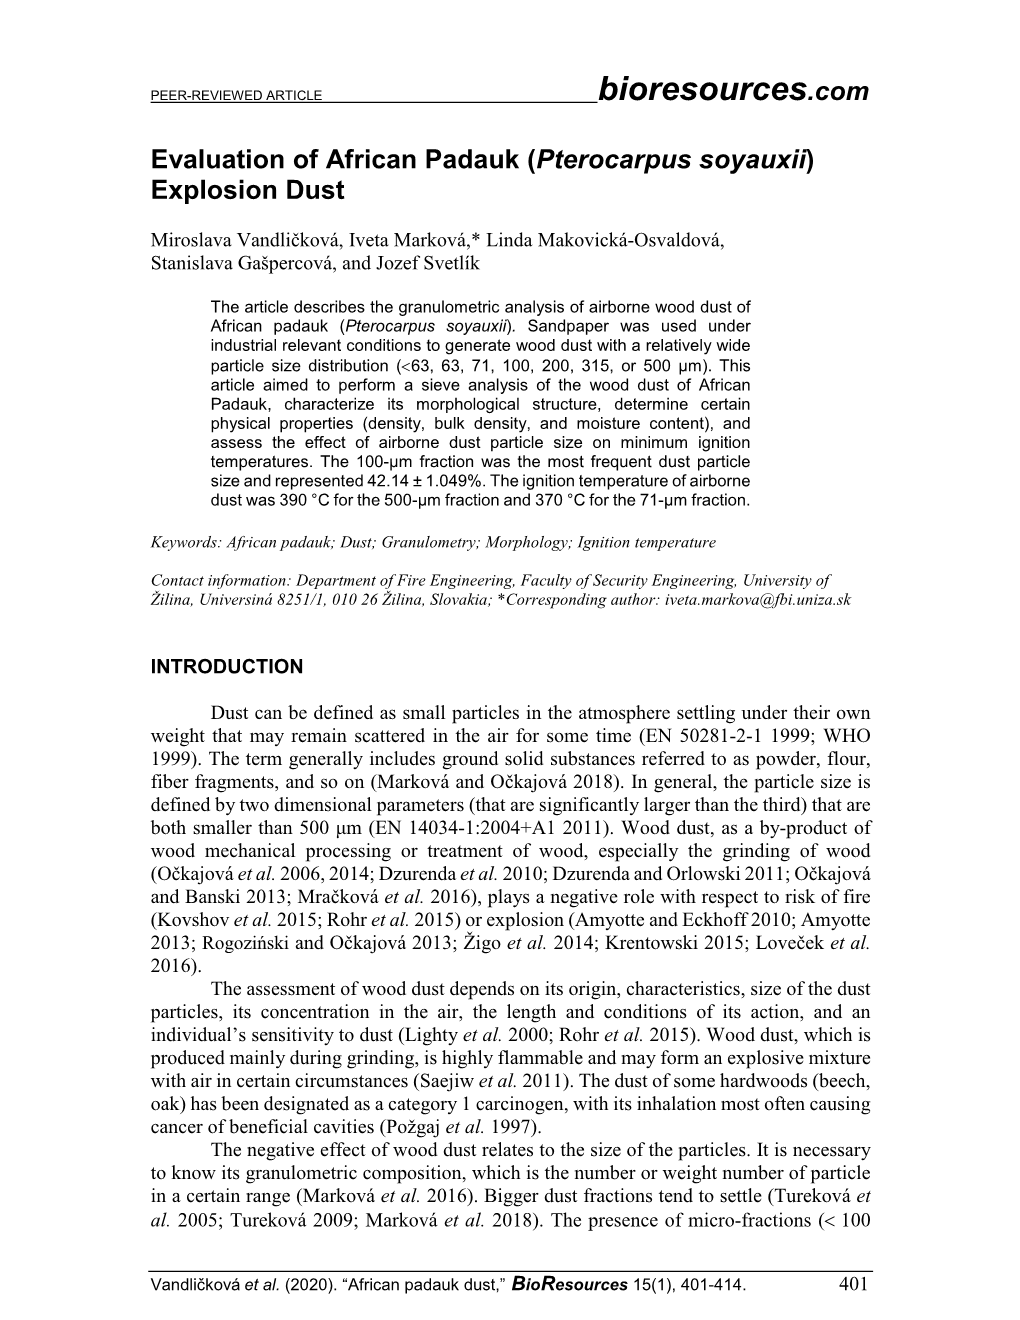 Evaluation of African Padauk (Pterocarpus Soyauxii) Explosion Dust